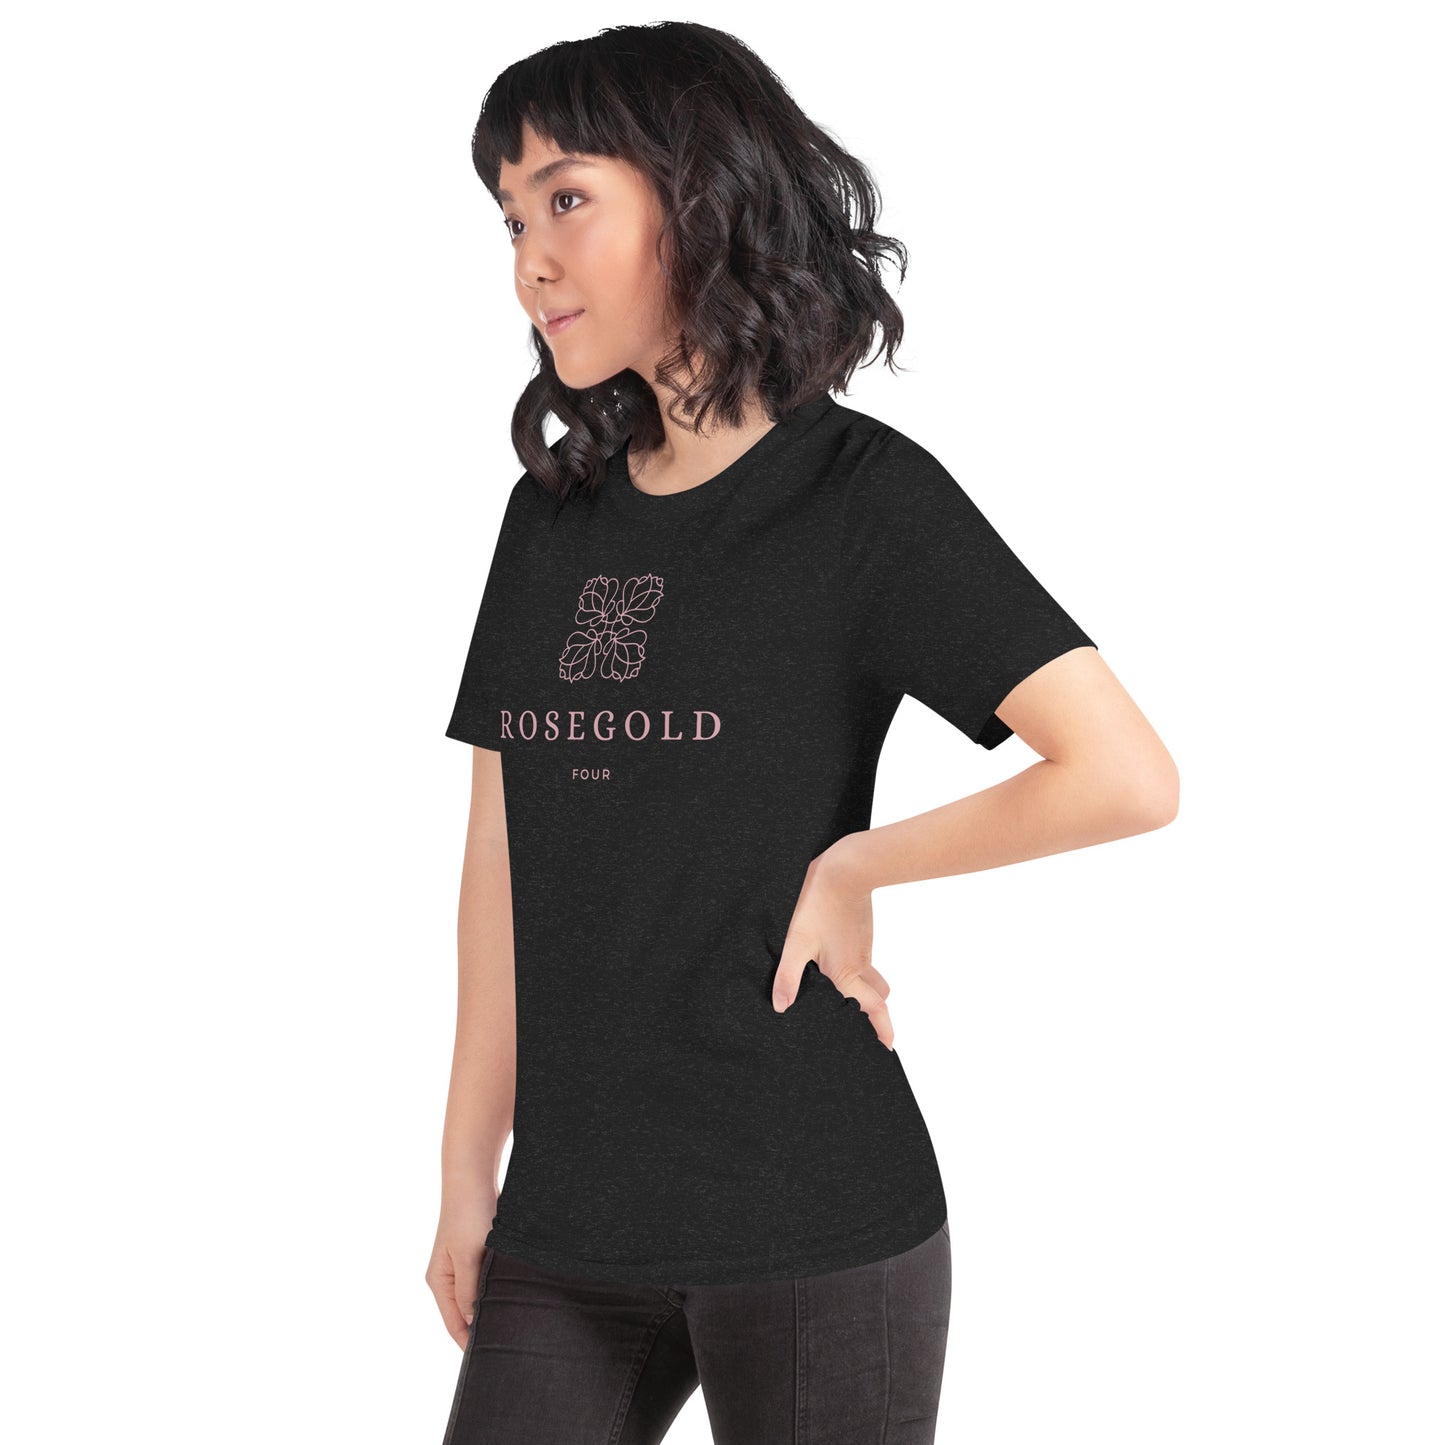 Rosegold Four - Printed Unisex t-shirt